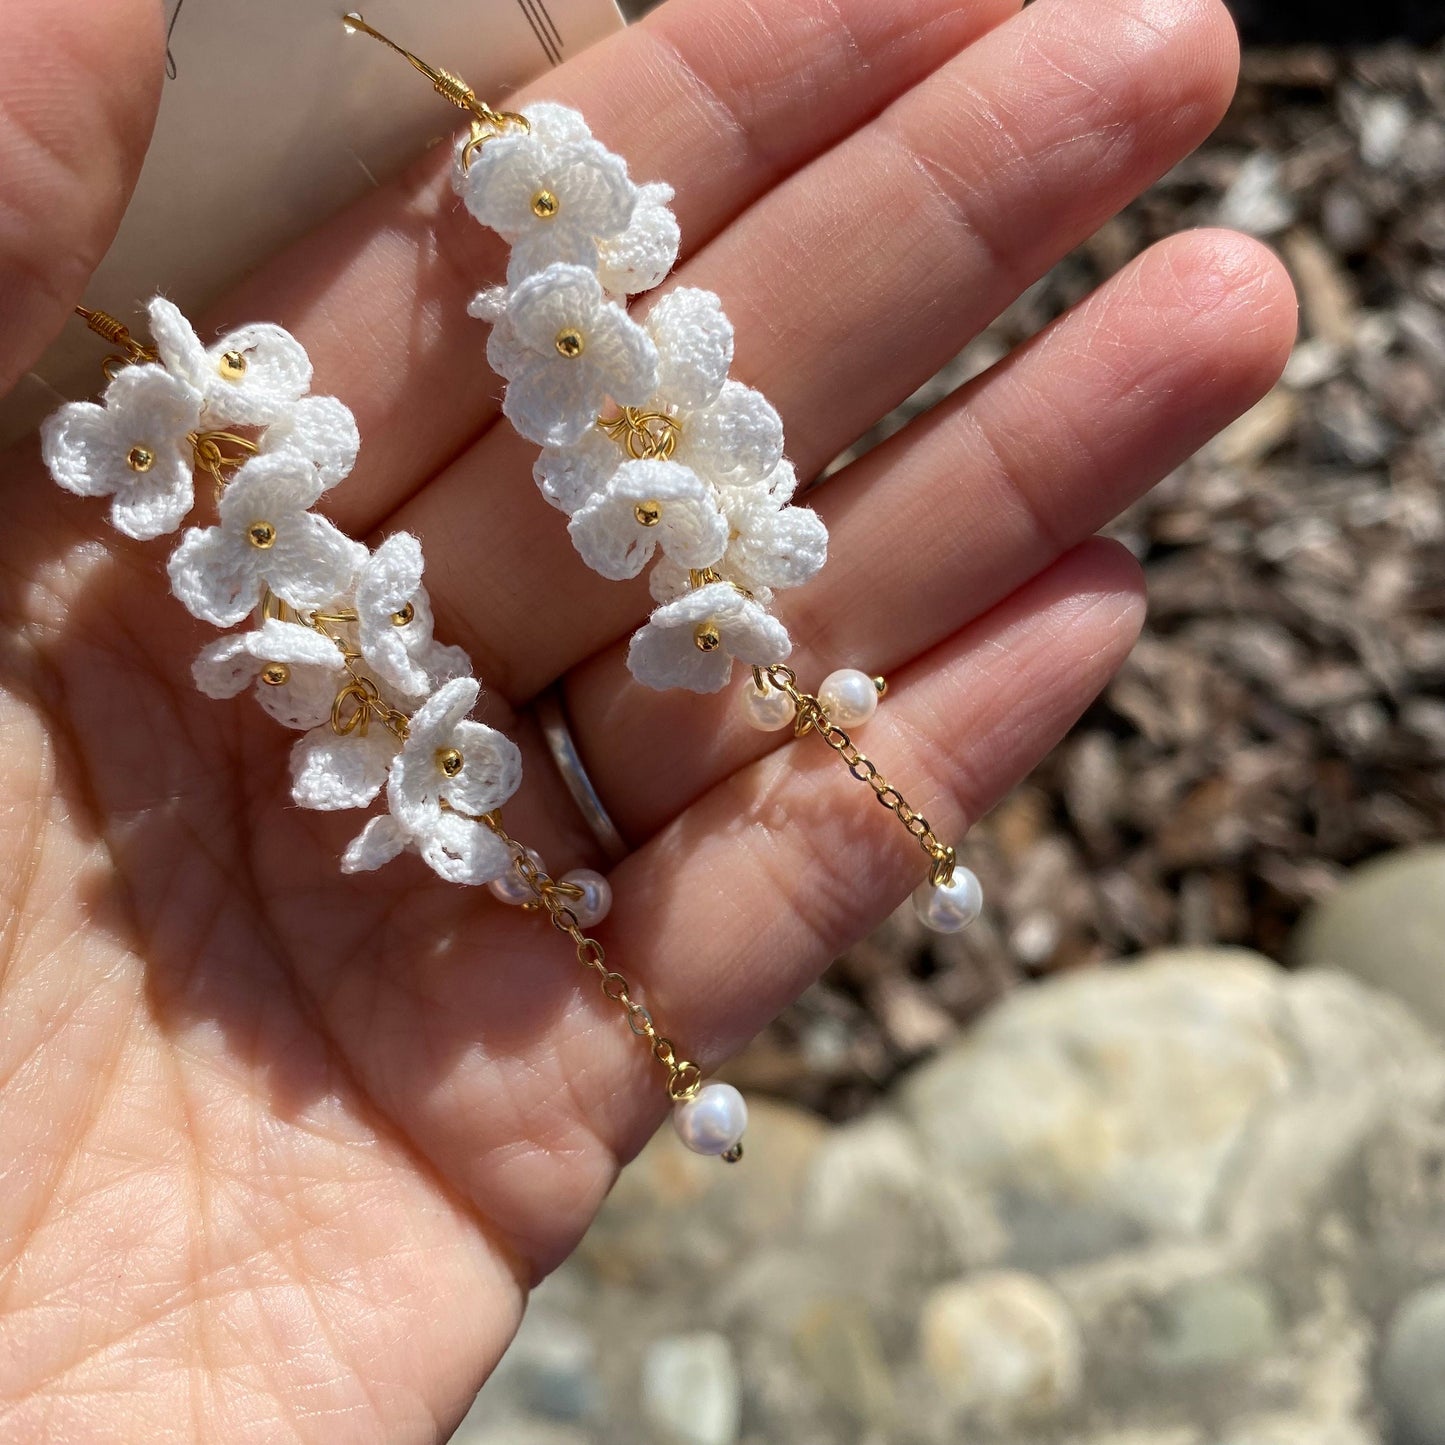 Pure crystal white flower cluster crochet dangle earrings/Microcrochet/14k gold/gift for her/Knitting handmade jewelry/Ship from US